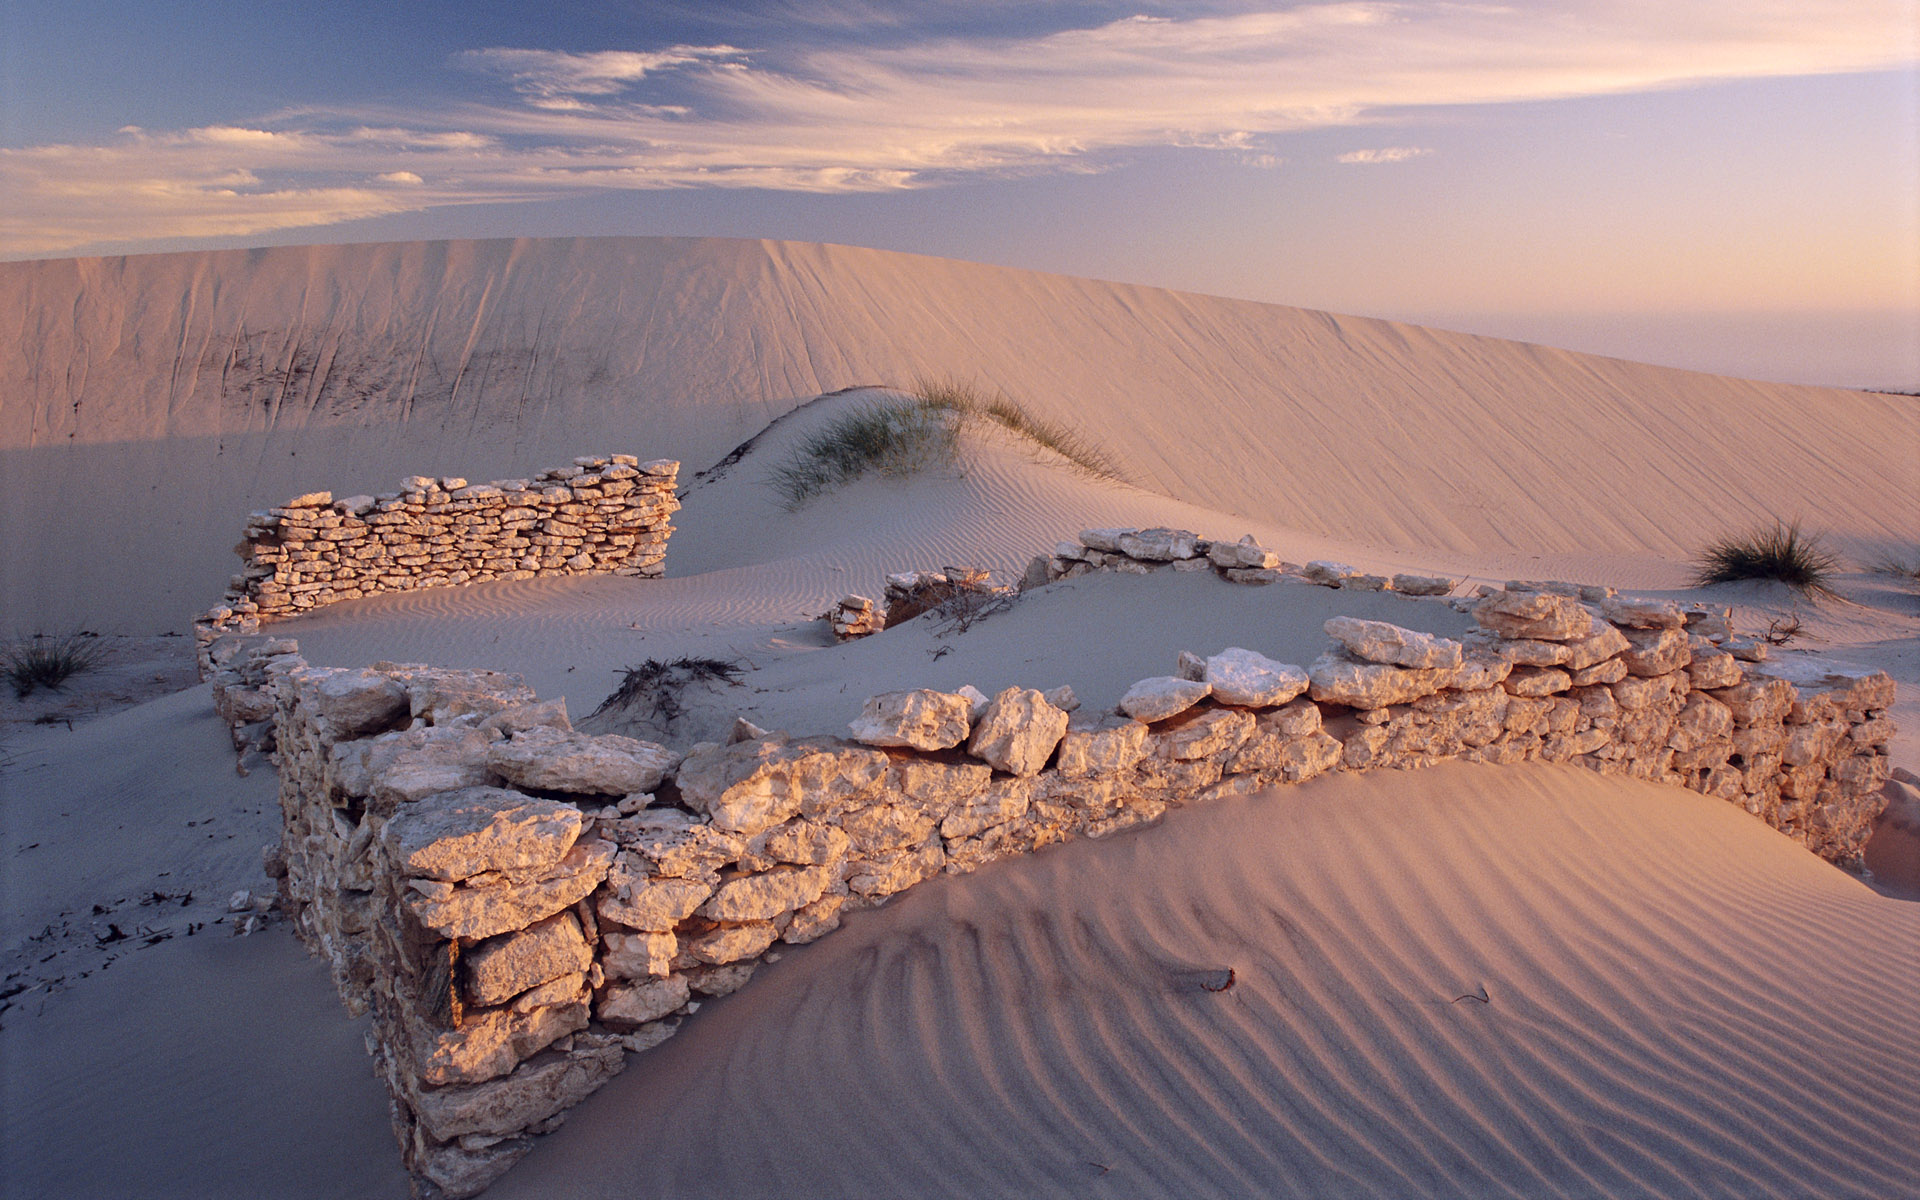 Descarga gratuita de fondo de pantalla para móvil de Desierto, Tierra/naturaleza.